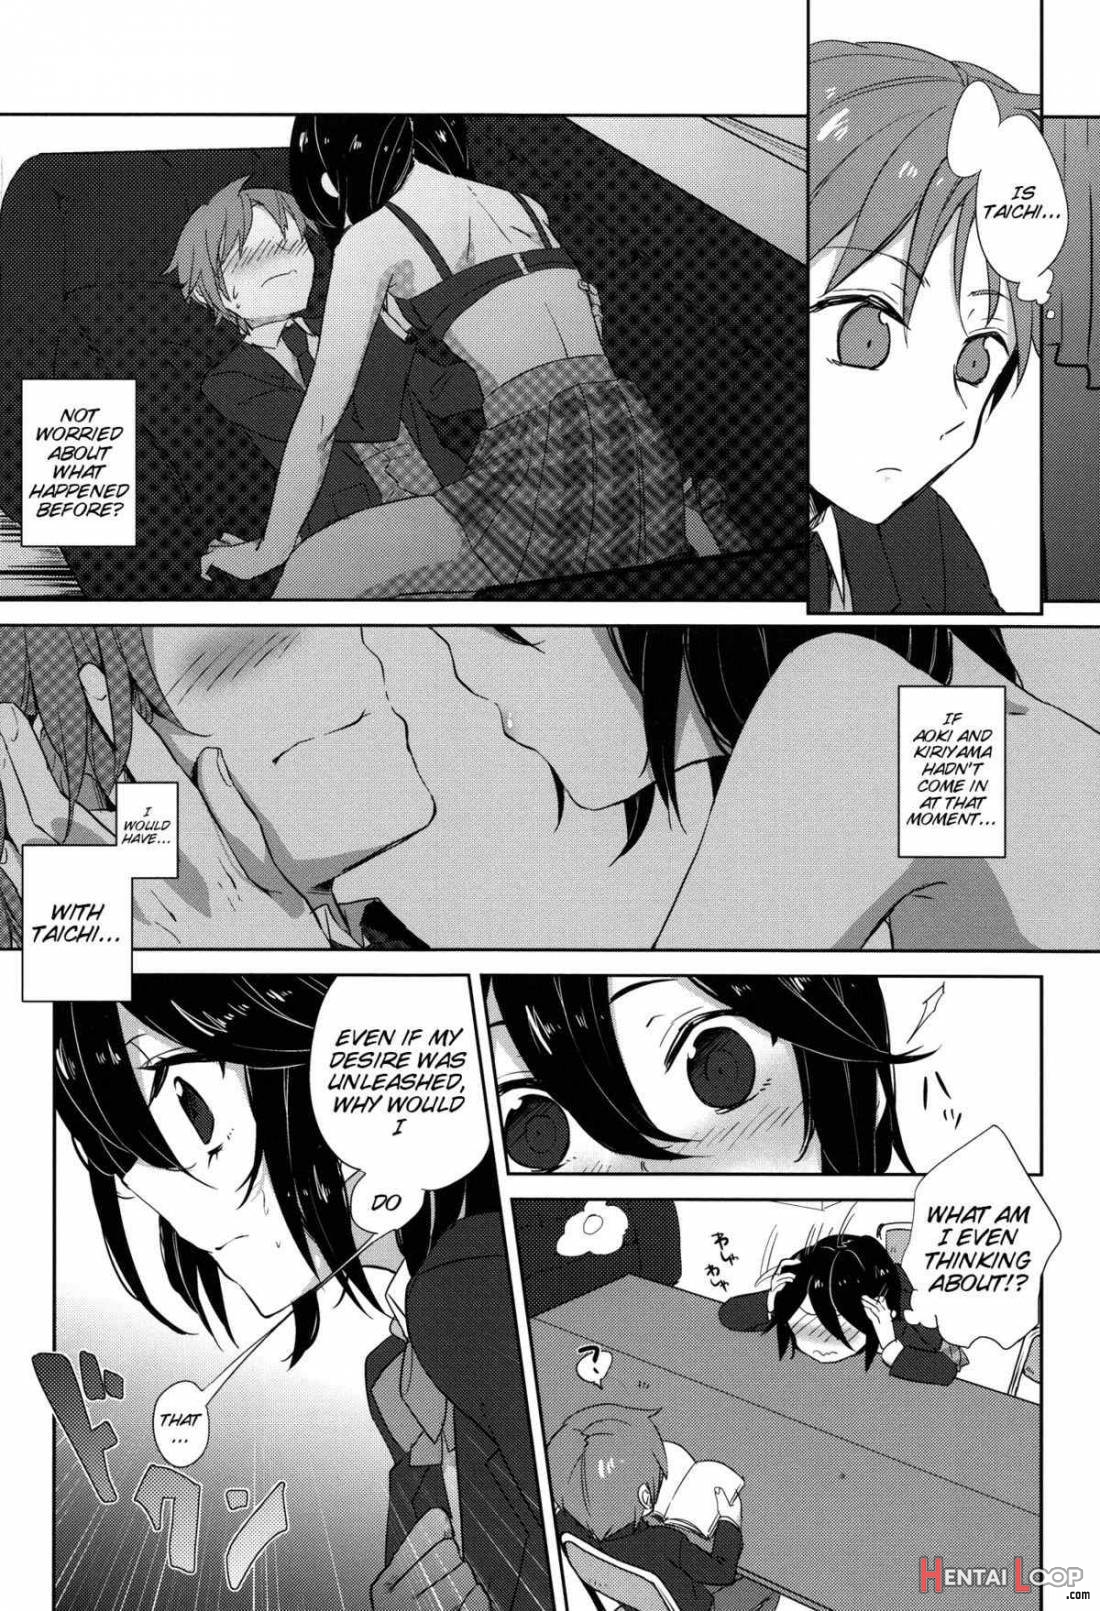 Himeko Random page 3